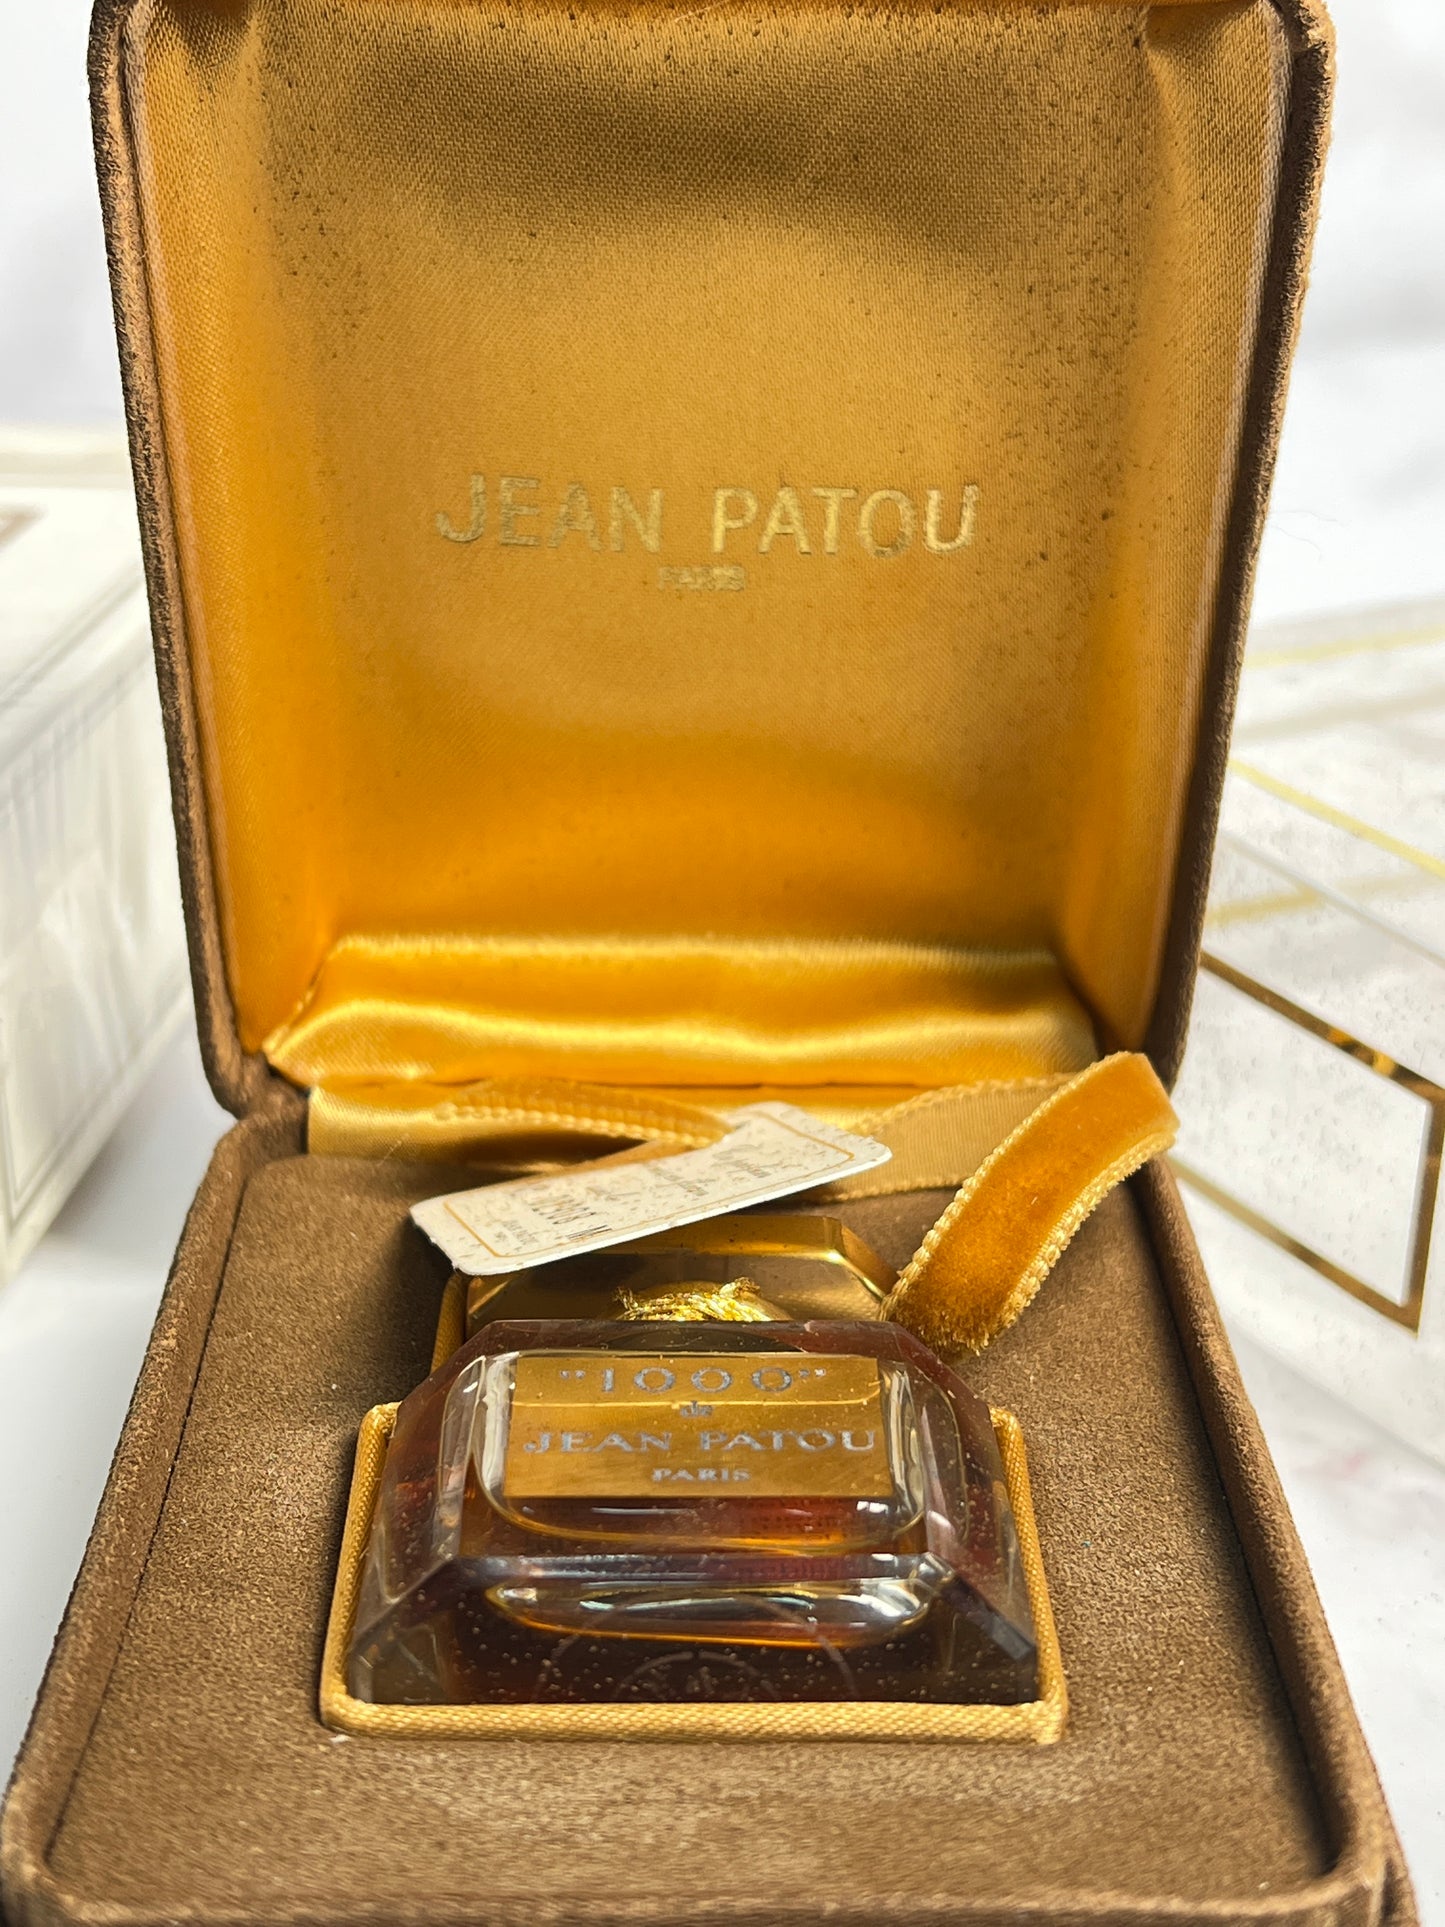 Jean Patou 1000  7.5ml 1/4 oz Parfum Perfume - JUNE-A18